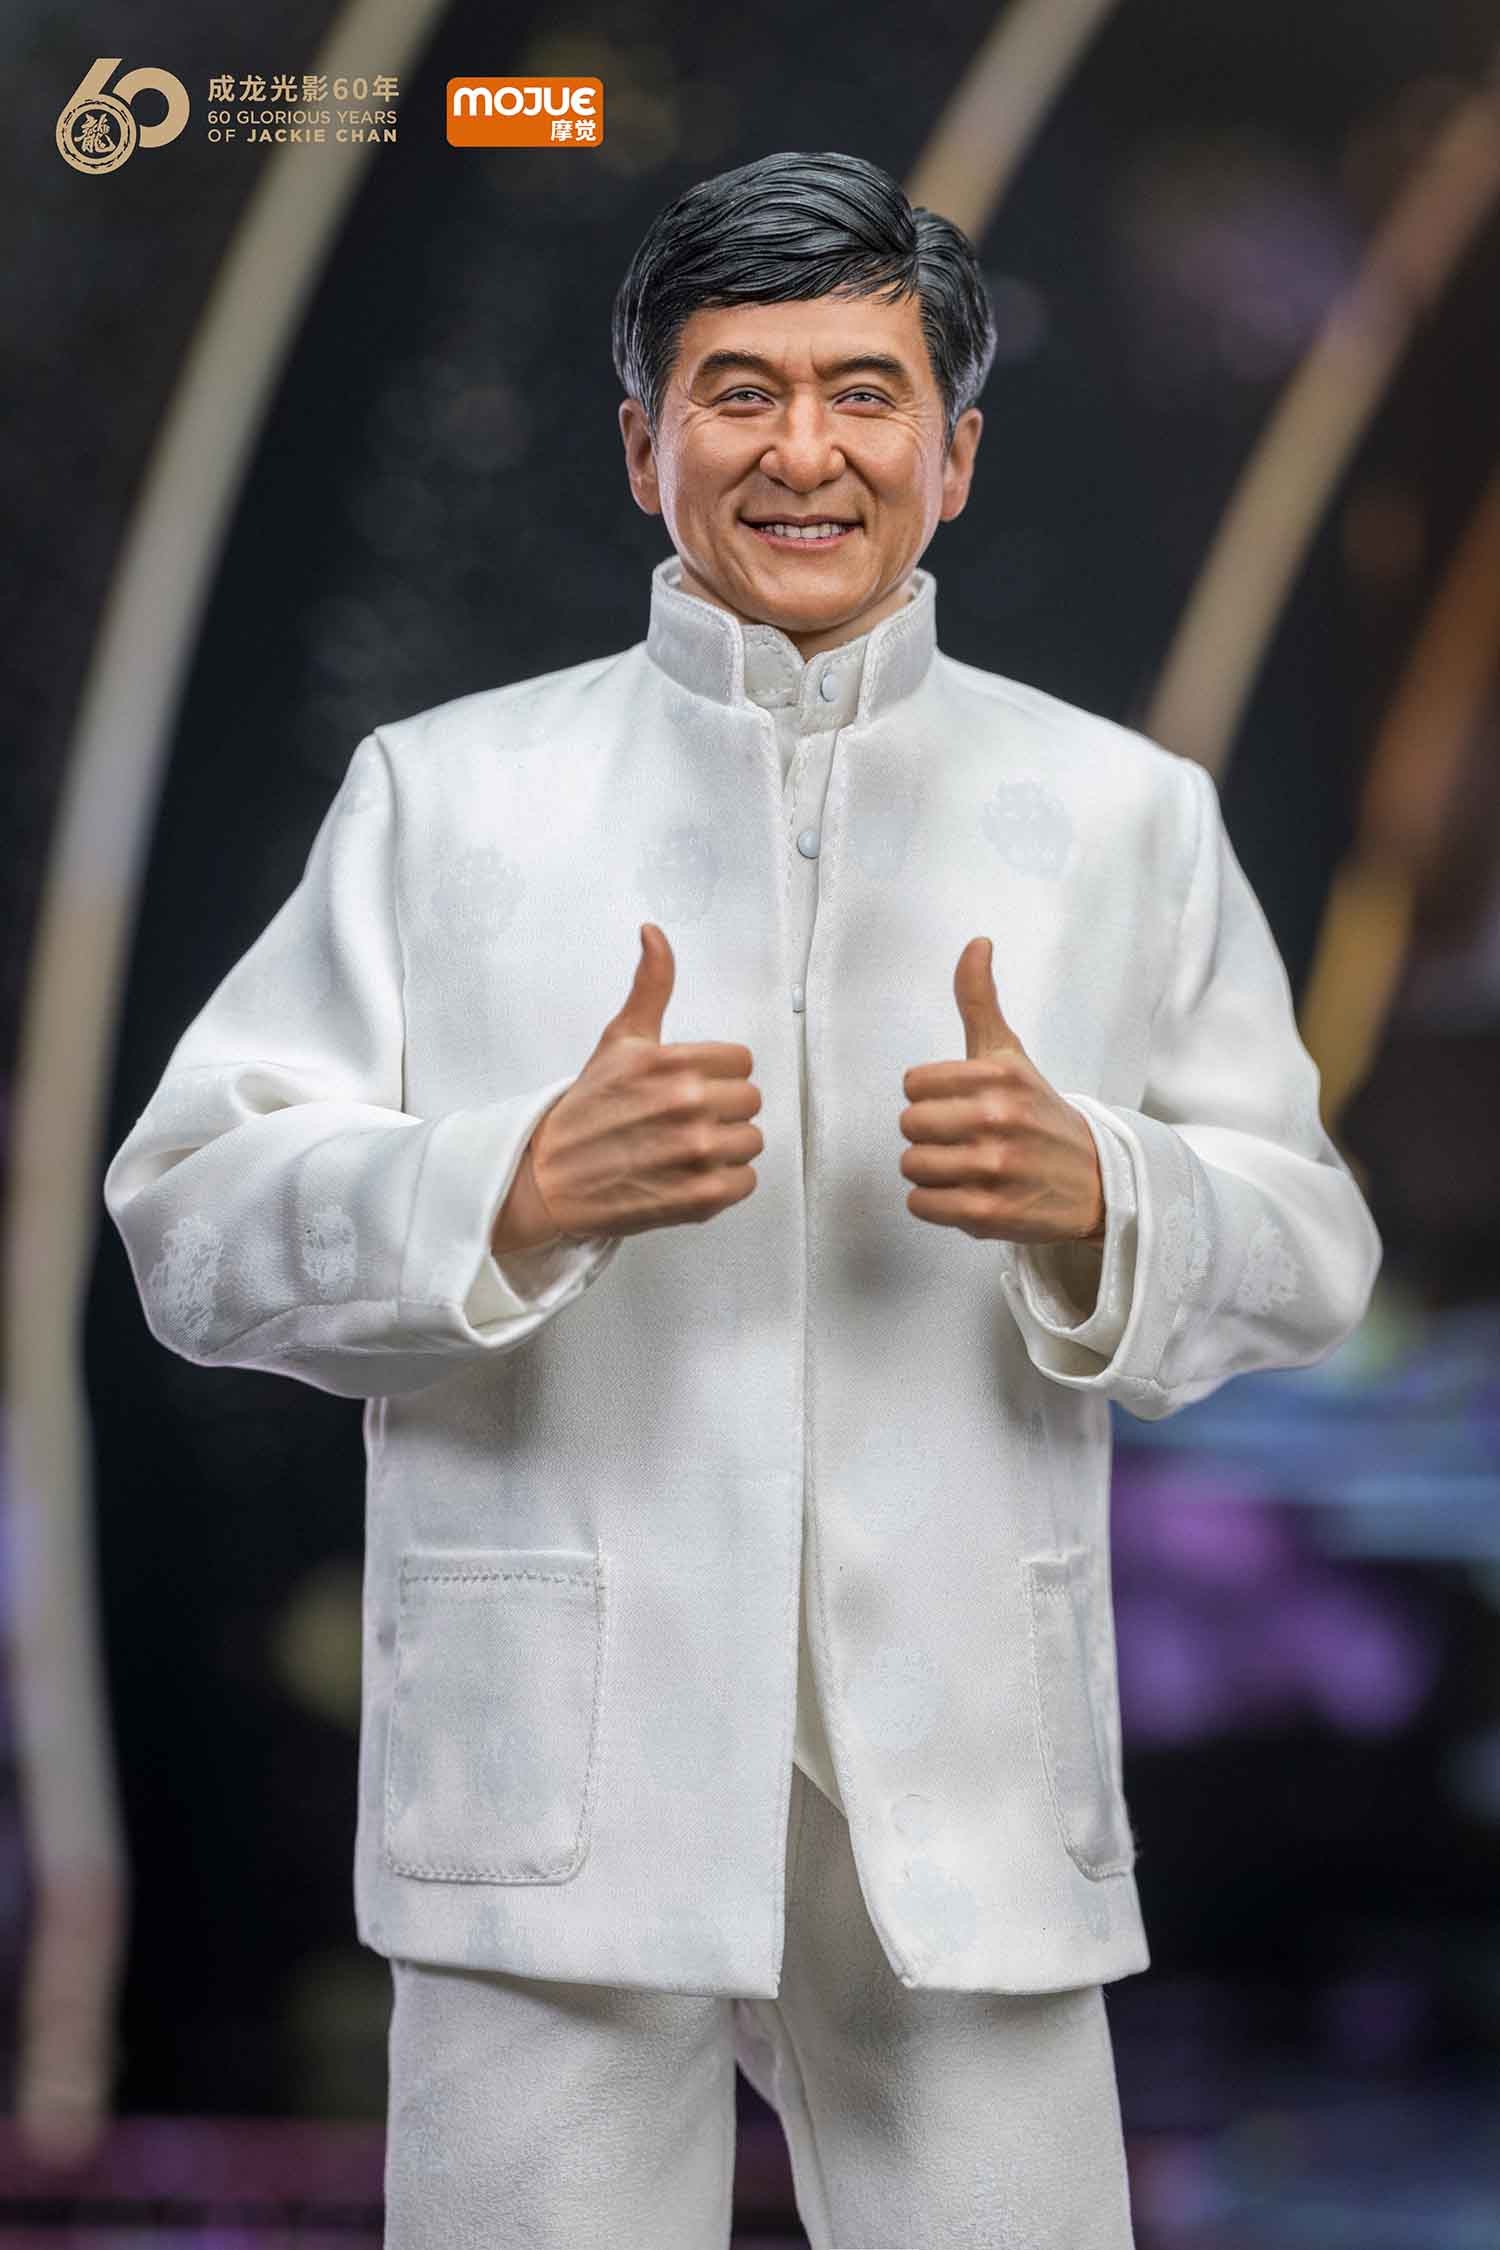 Jackie Chan - Legendary Edition